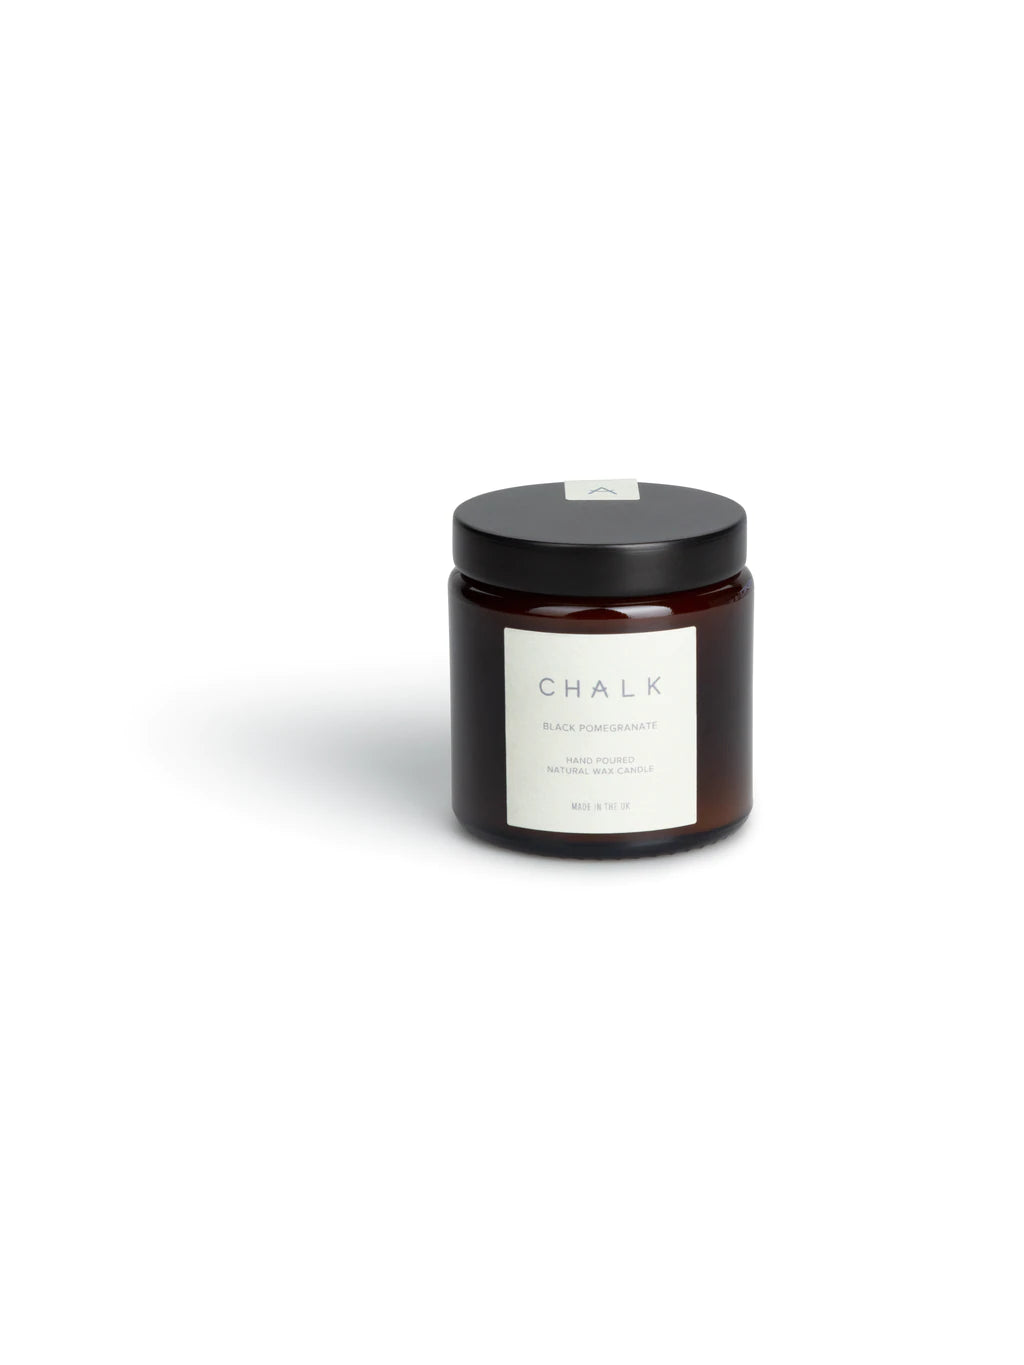 Chalk Amber 96g Jar Candle - Black Pomegranate